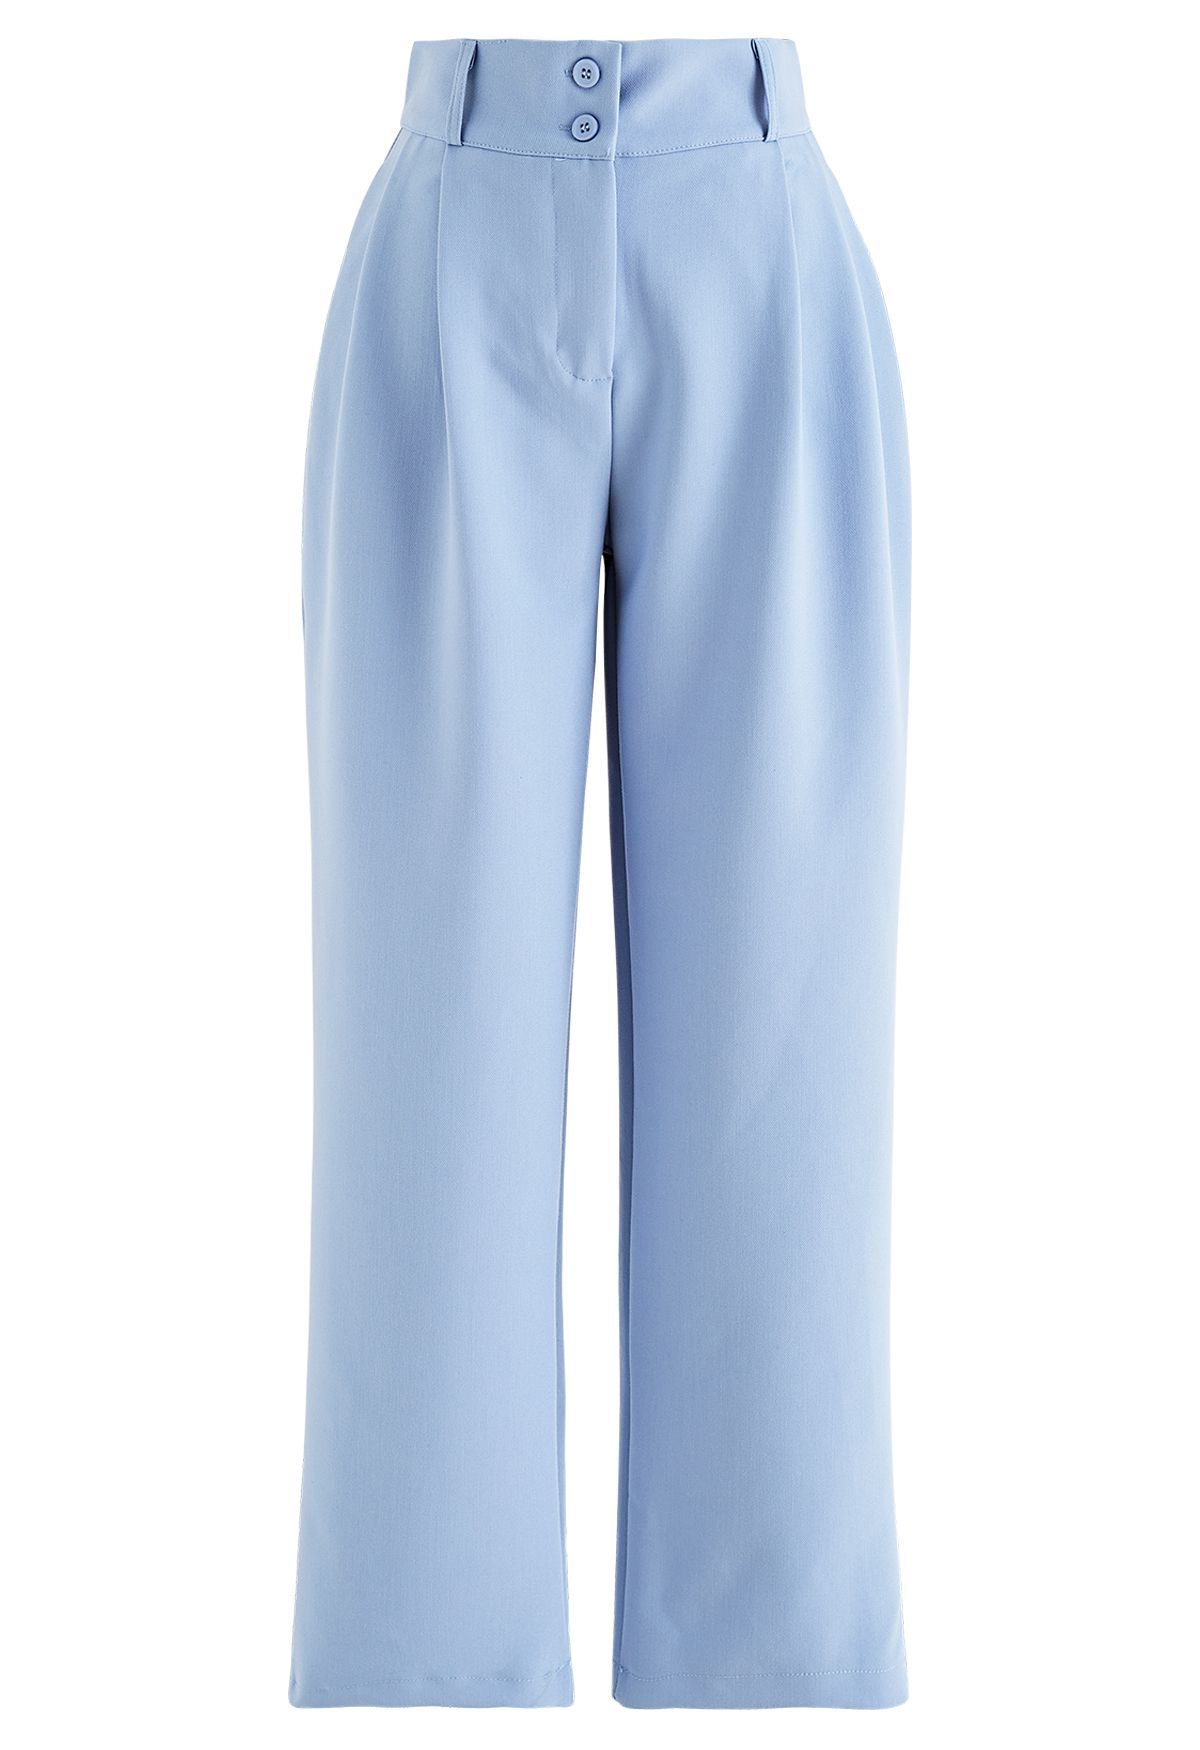 Fascinating Straight Leg Drape Pants in Blue | Chicwish